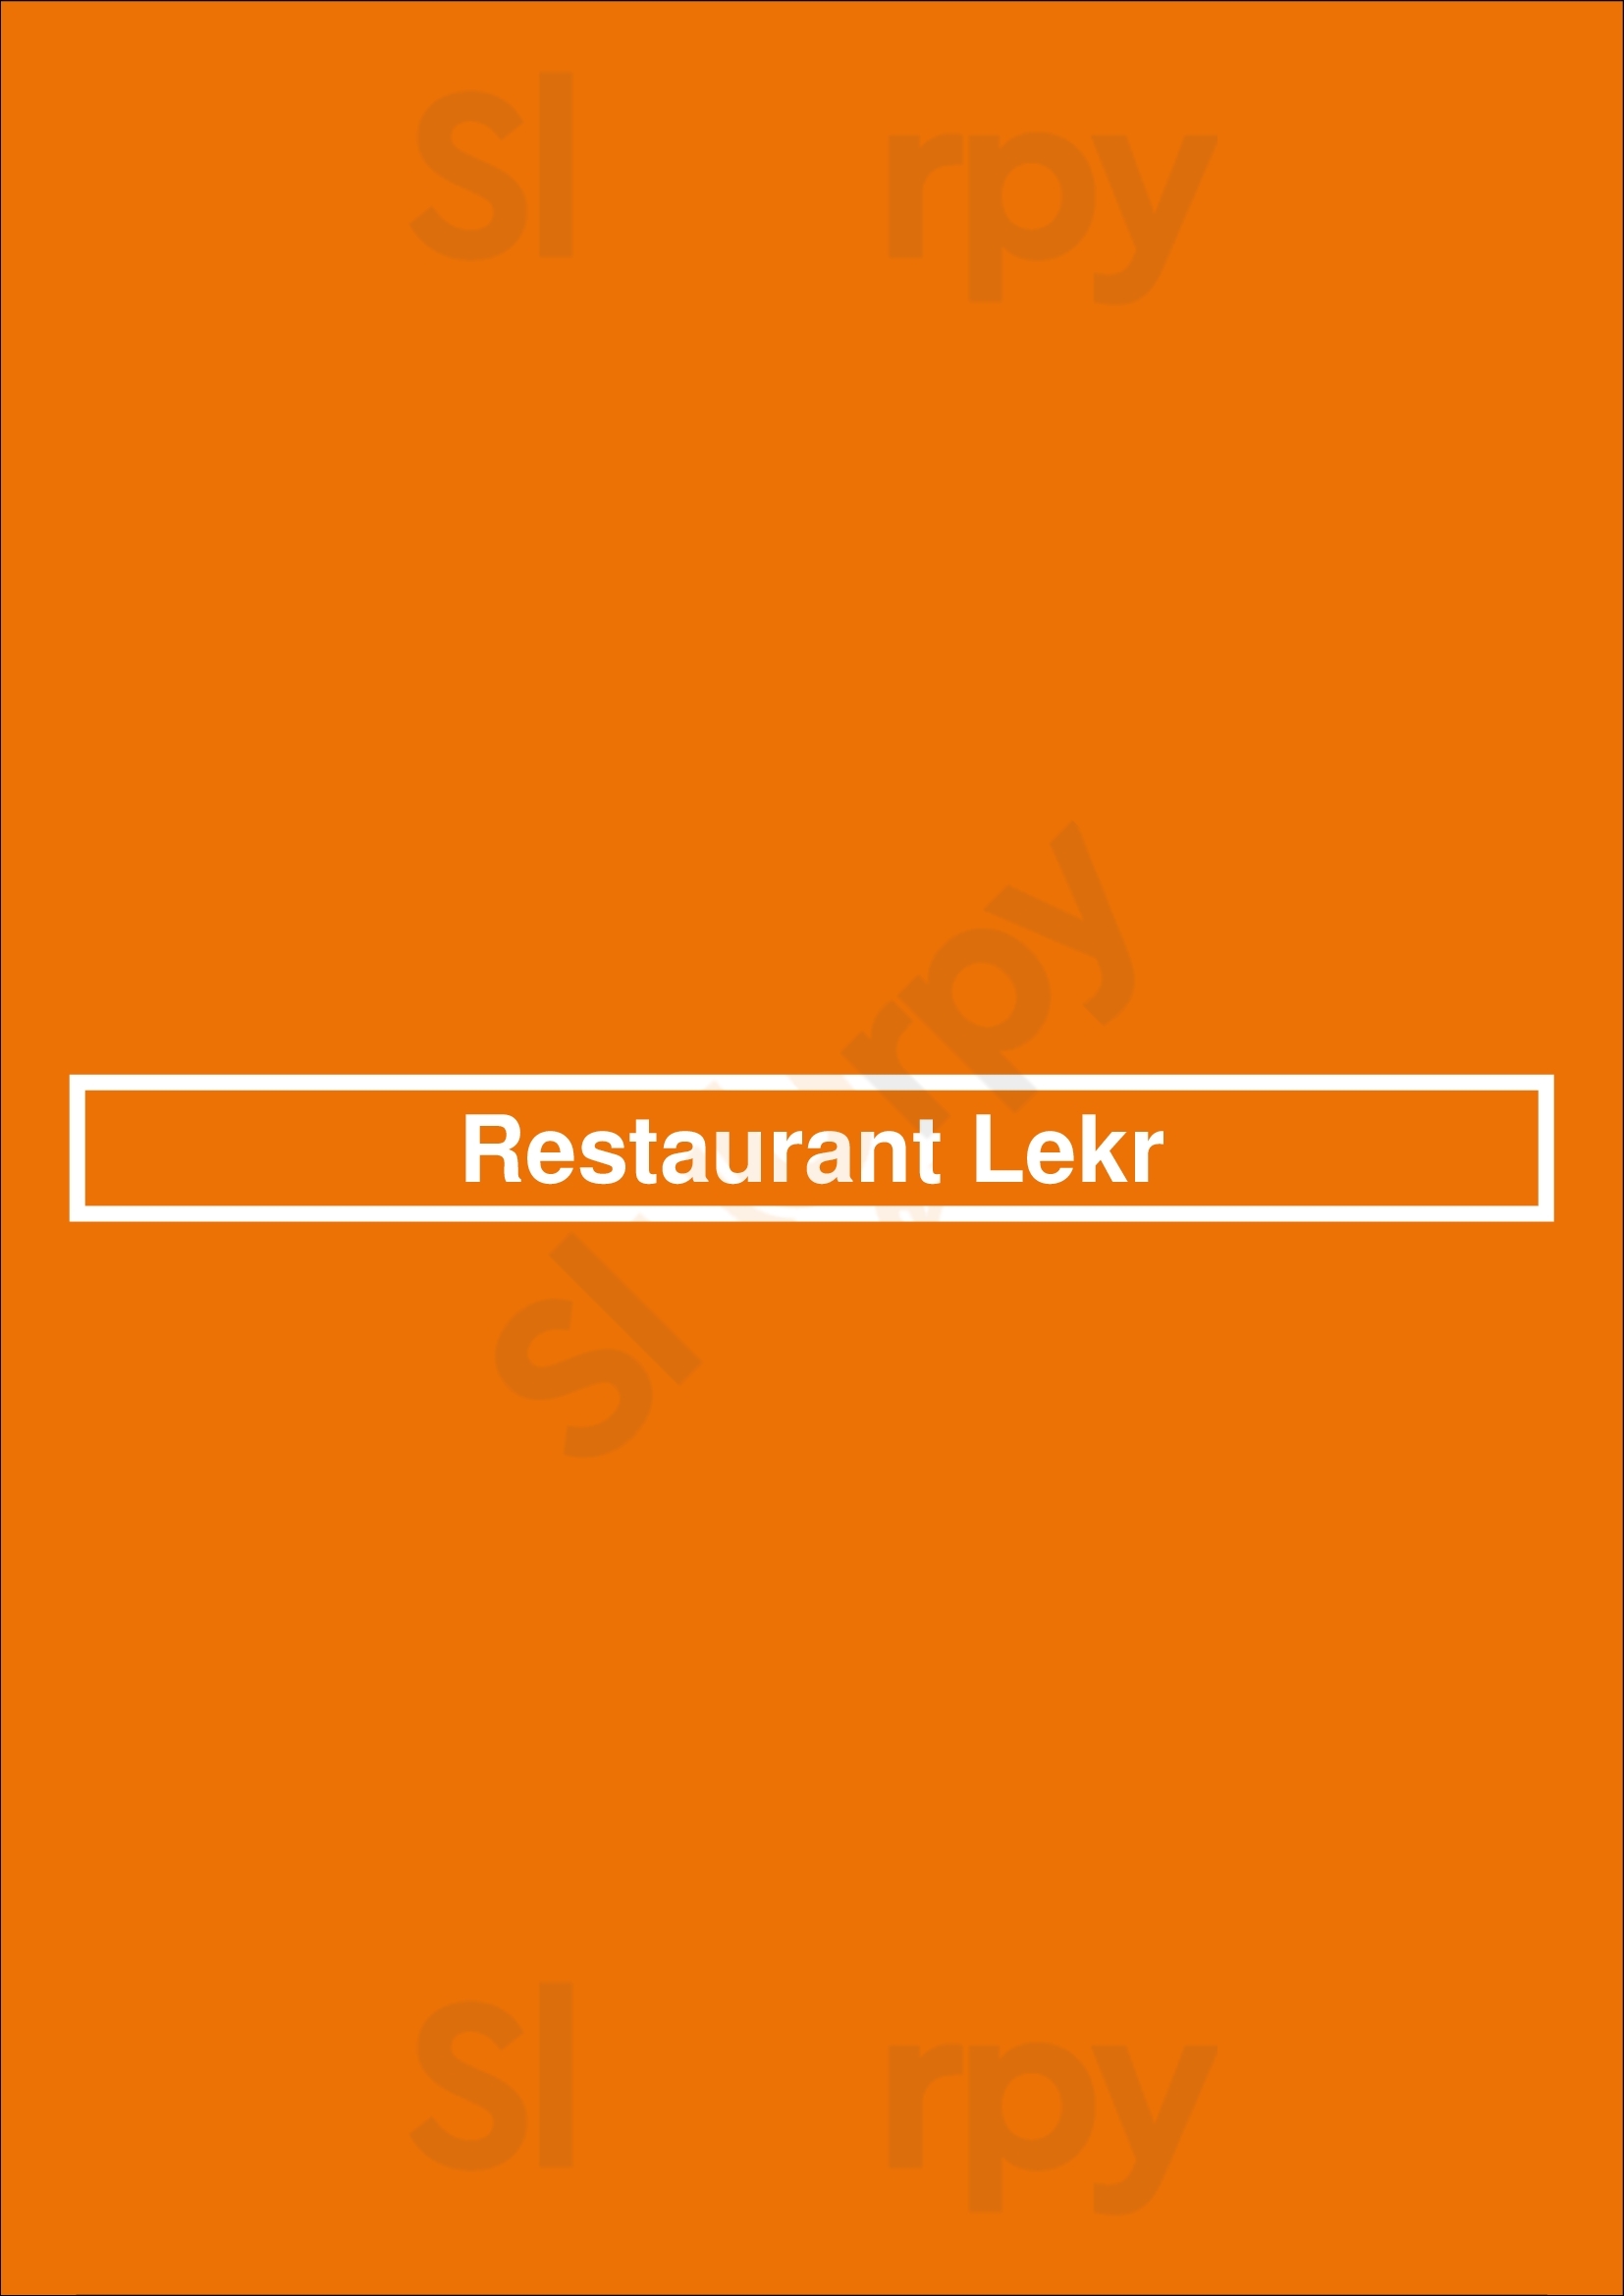 Restaurant Lekr Ankeveen Menu - 1